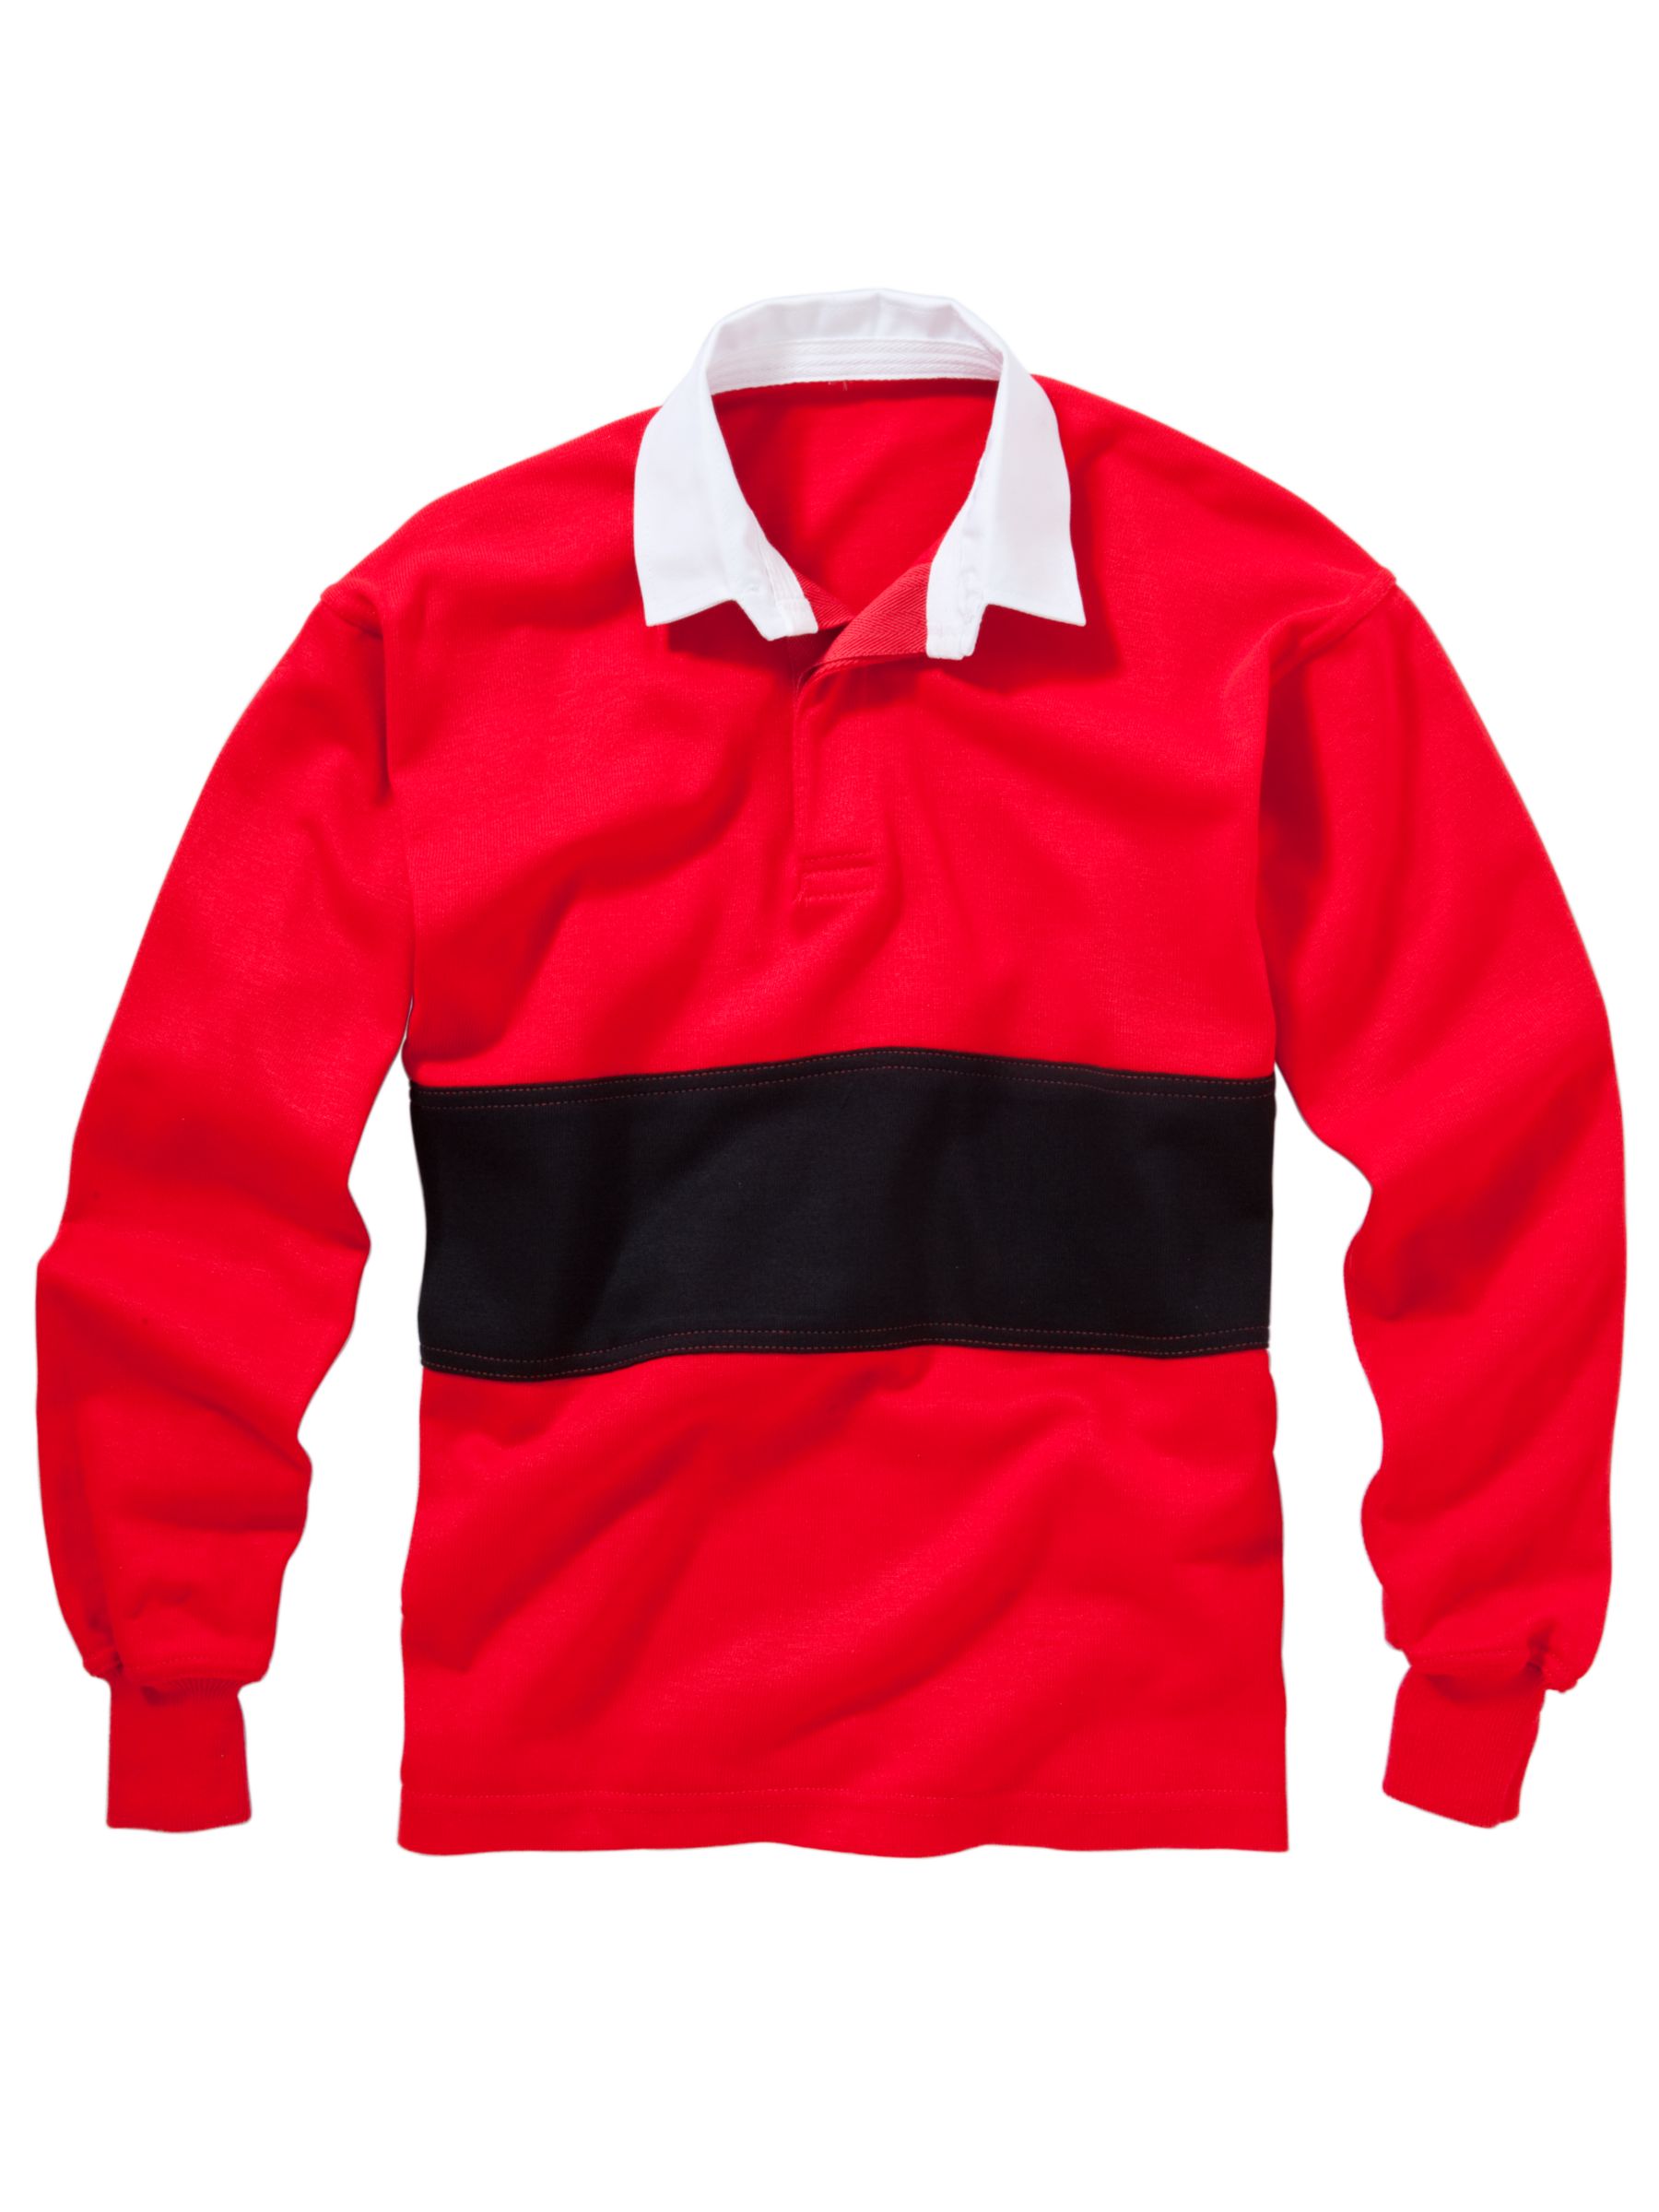 Thornden School Boys Rugby Shirt, Red/Black